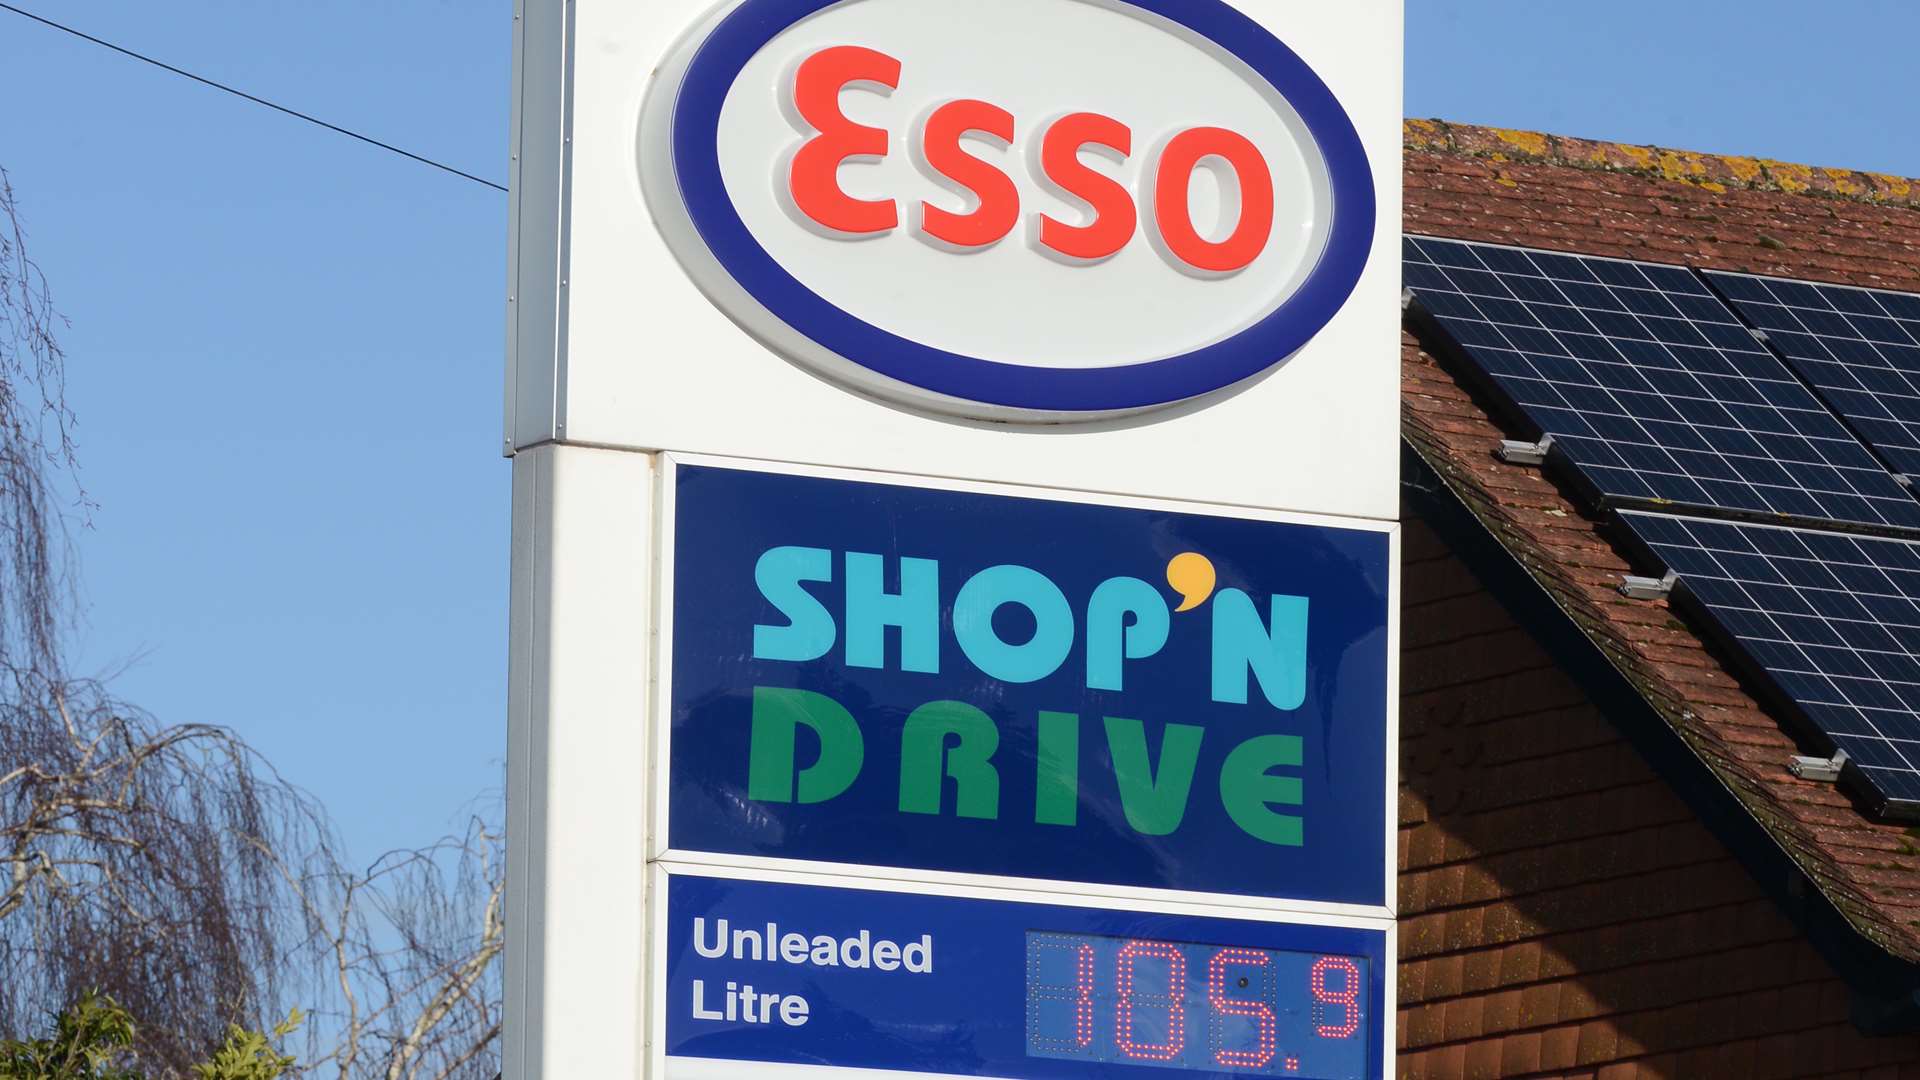 The Esso garage in Ashford Road, St Michael's